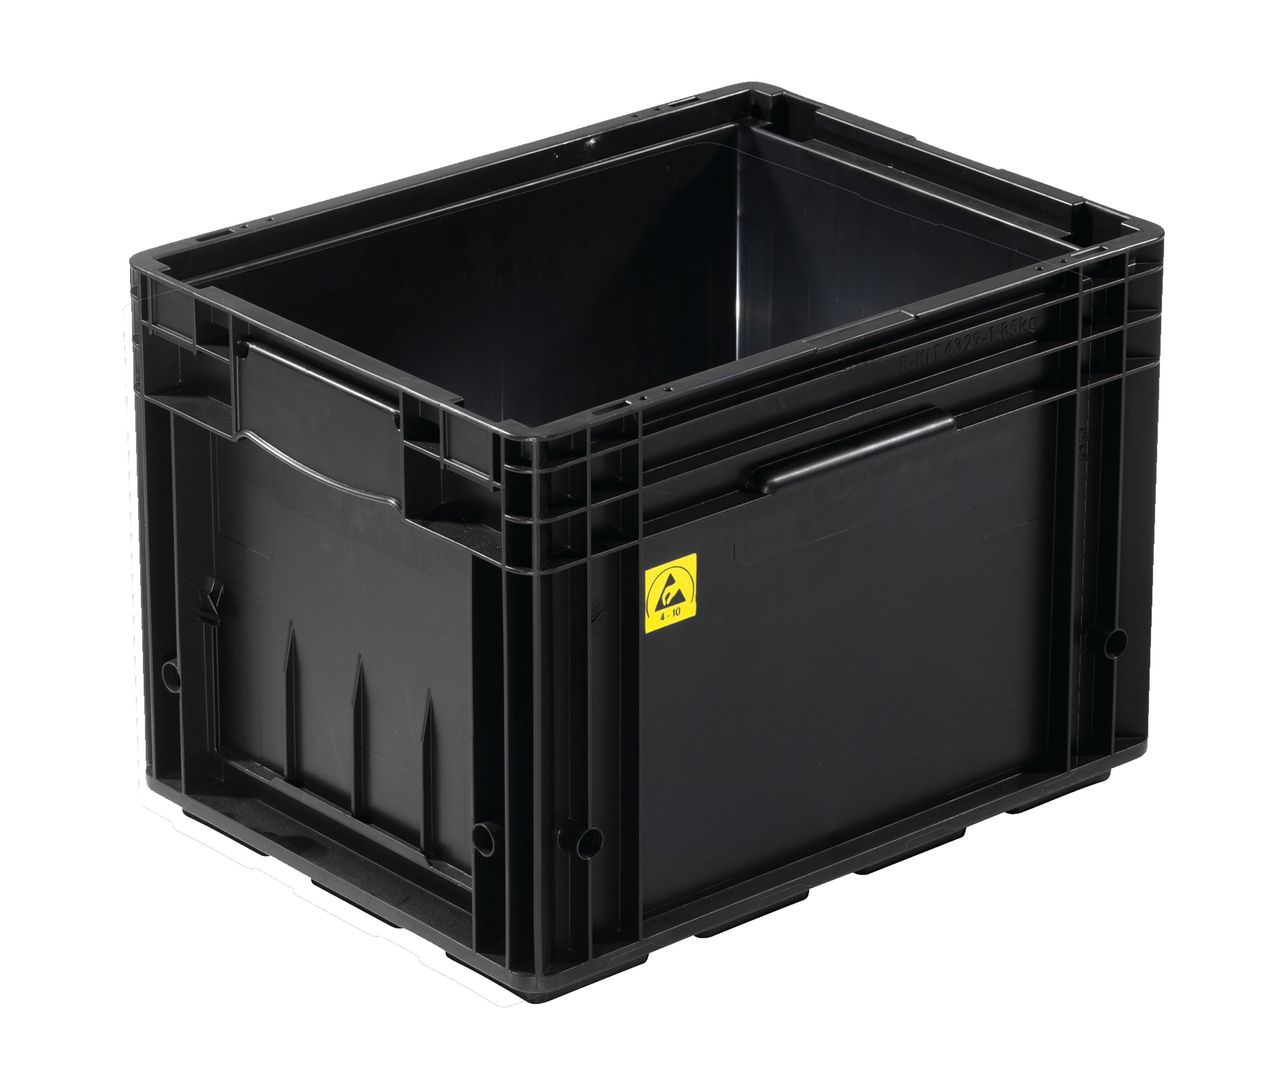 ESD-Behälter 400x300x280 mm, VDA-R-KLT 4129 ESD, Farbe schwarz